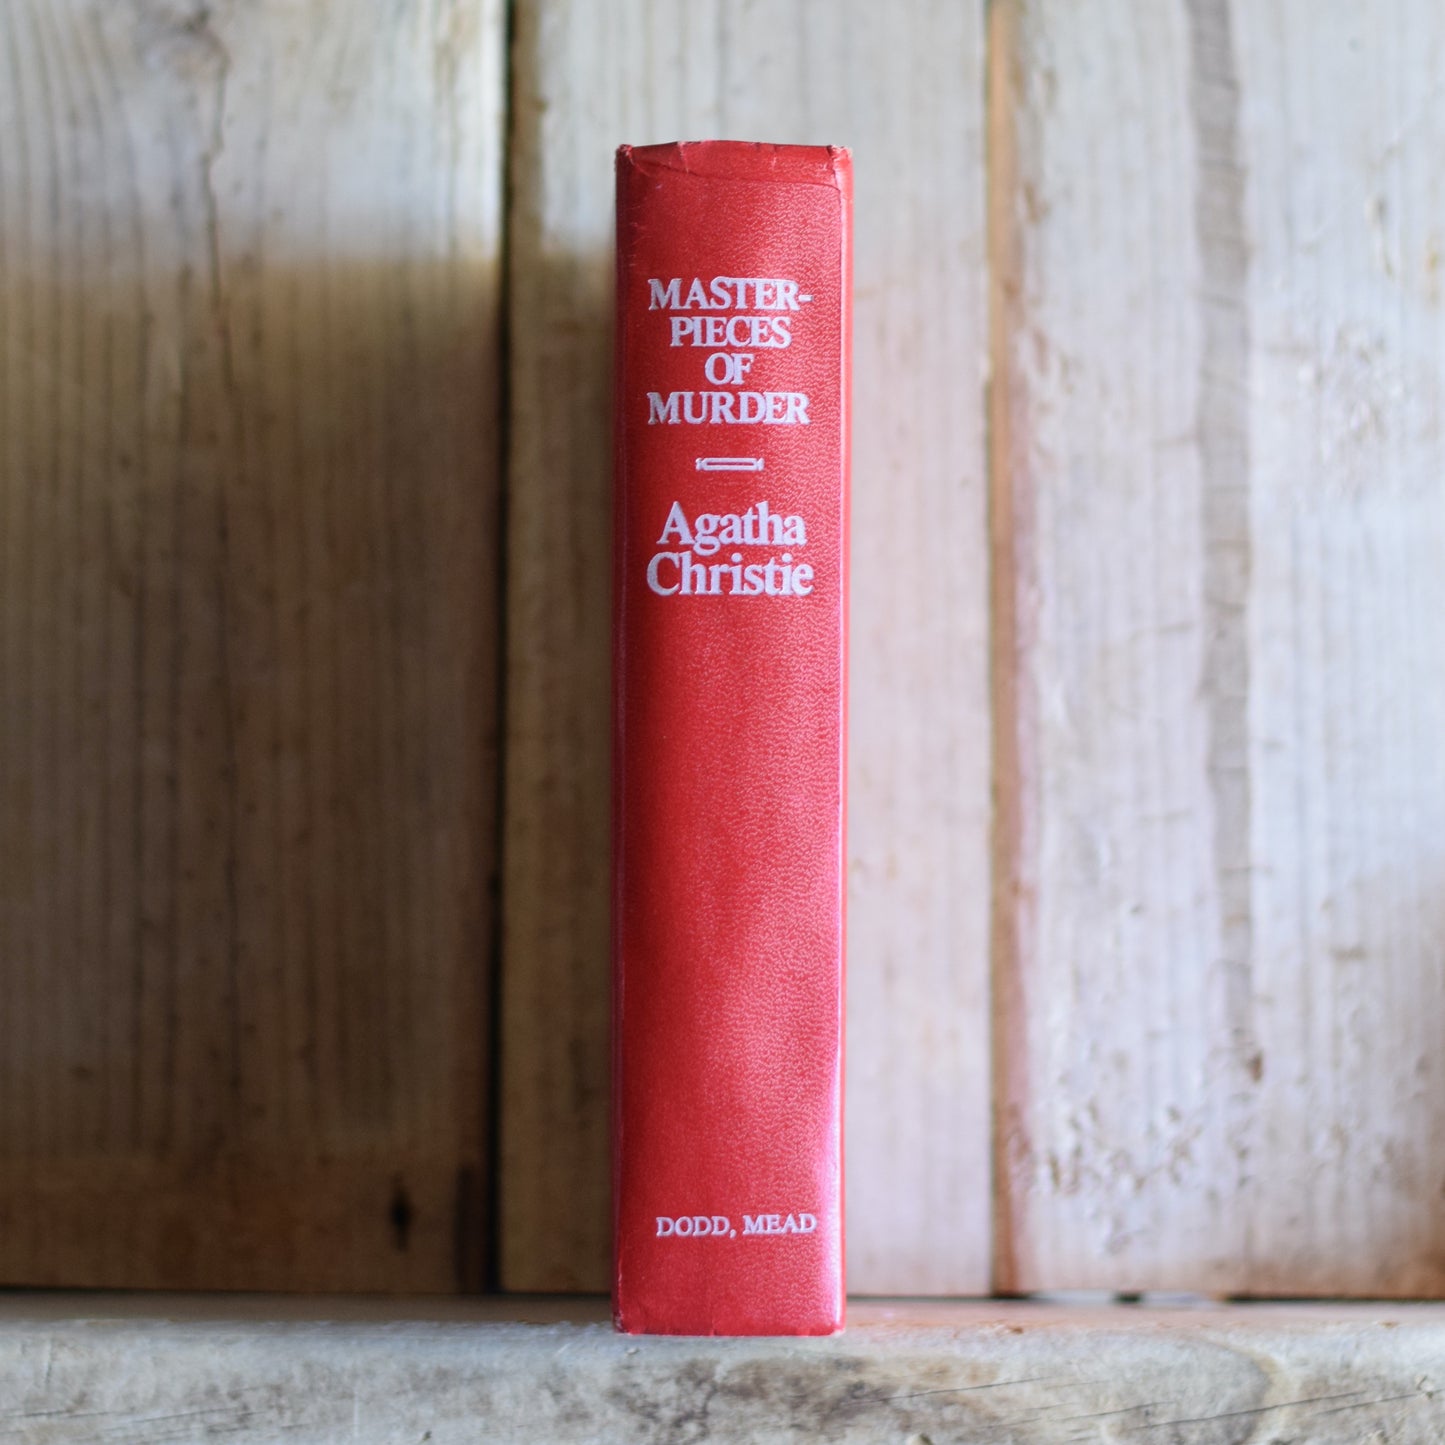 Vintage Hardback Fiction: Agatha Christie - Masterpieces of Murder BCE